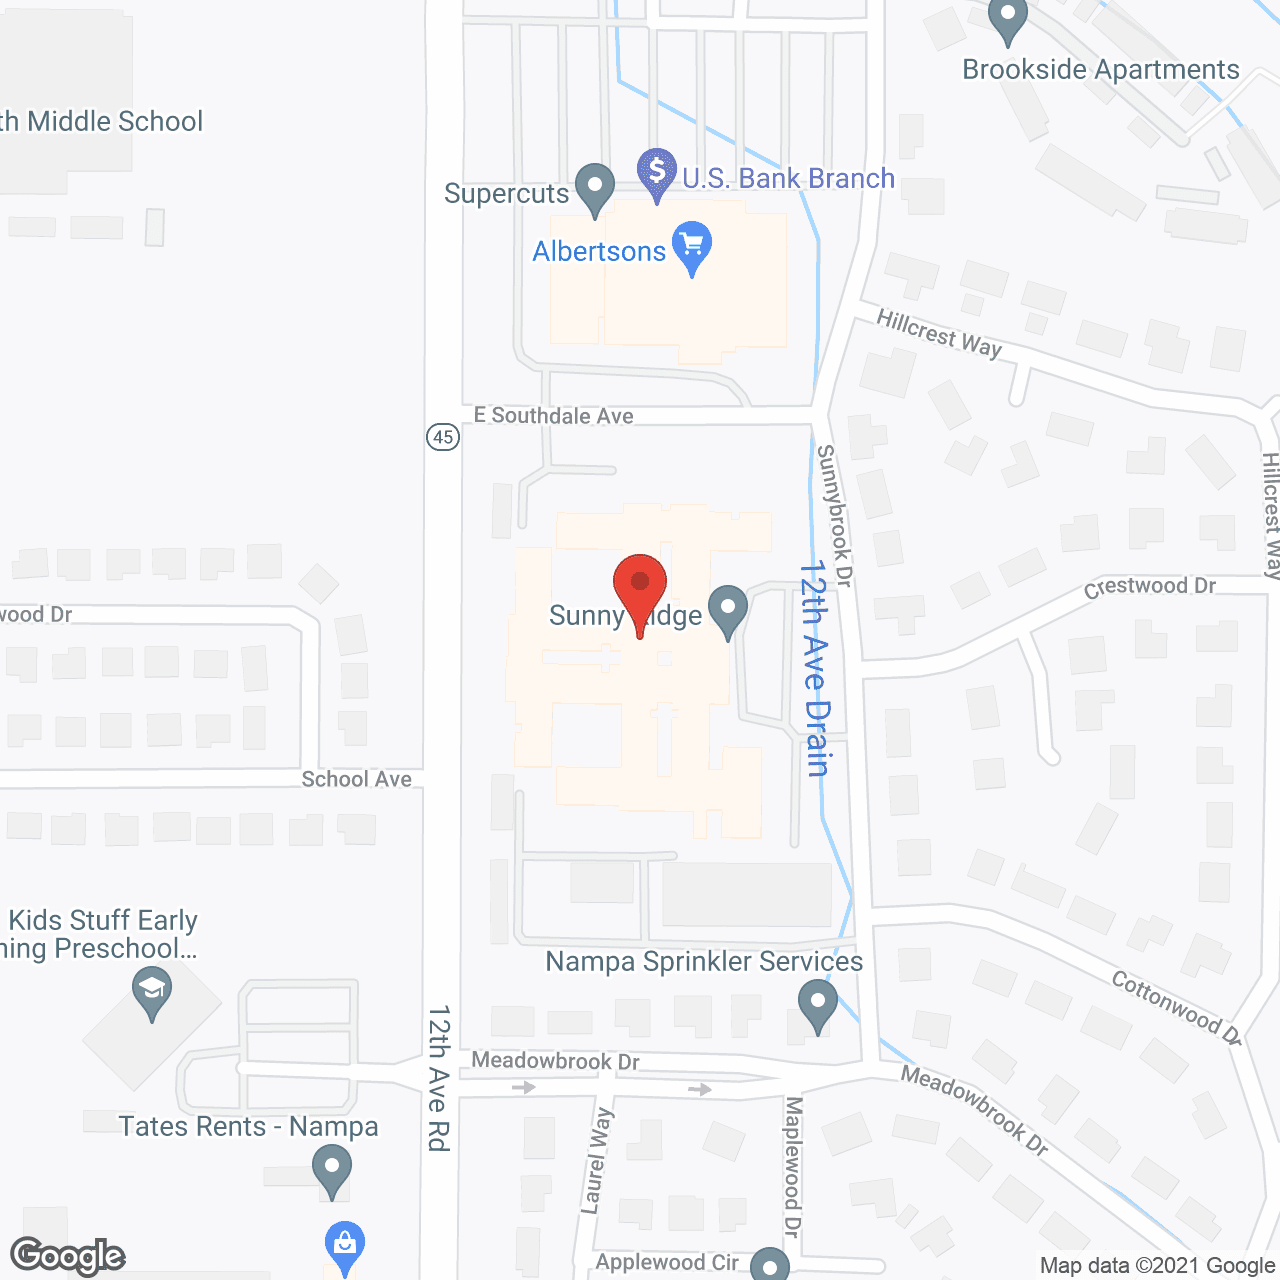 Sunny Ridge in google map